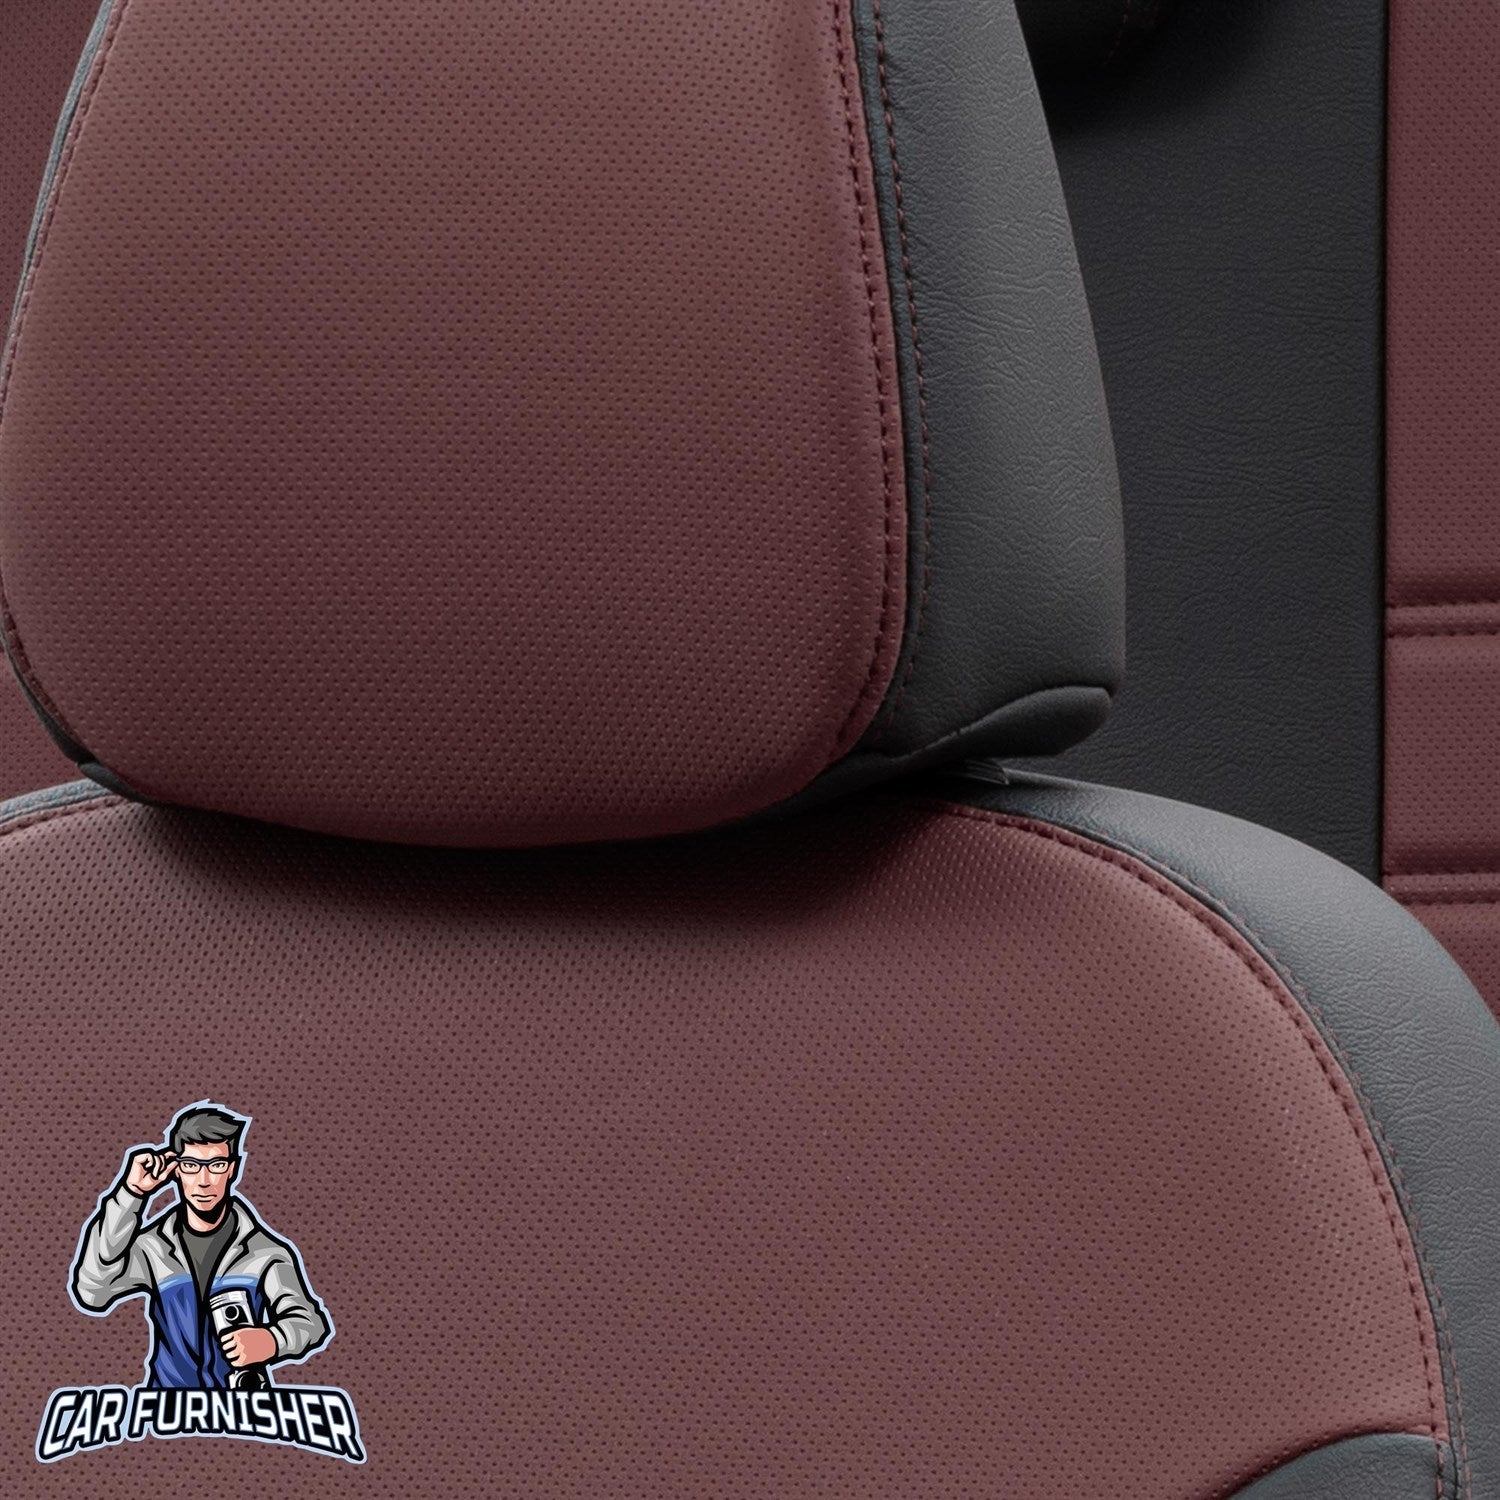 Hyundai i30 Seat Covers Istanbul Leather Design Burgundy Leather